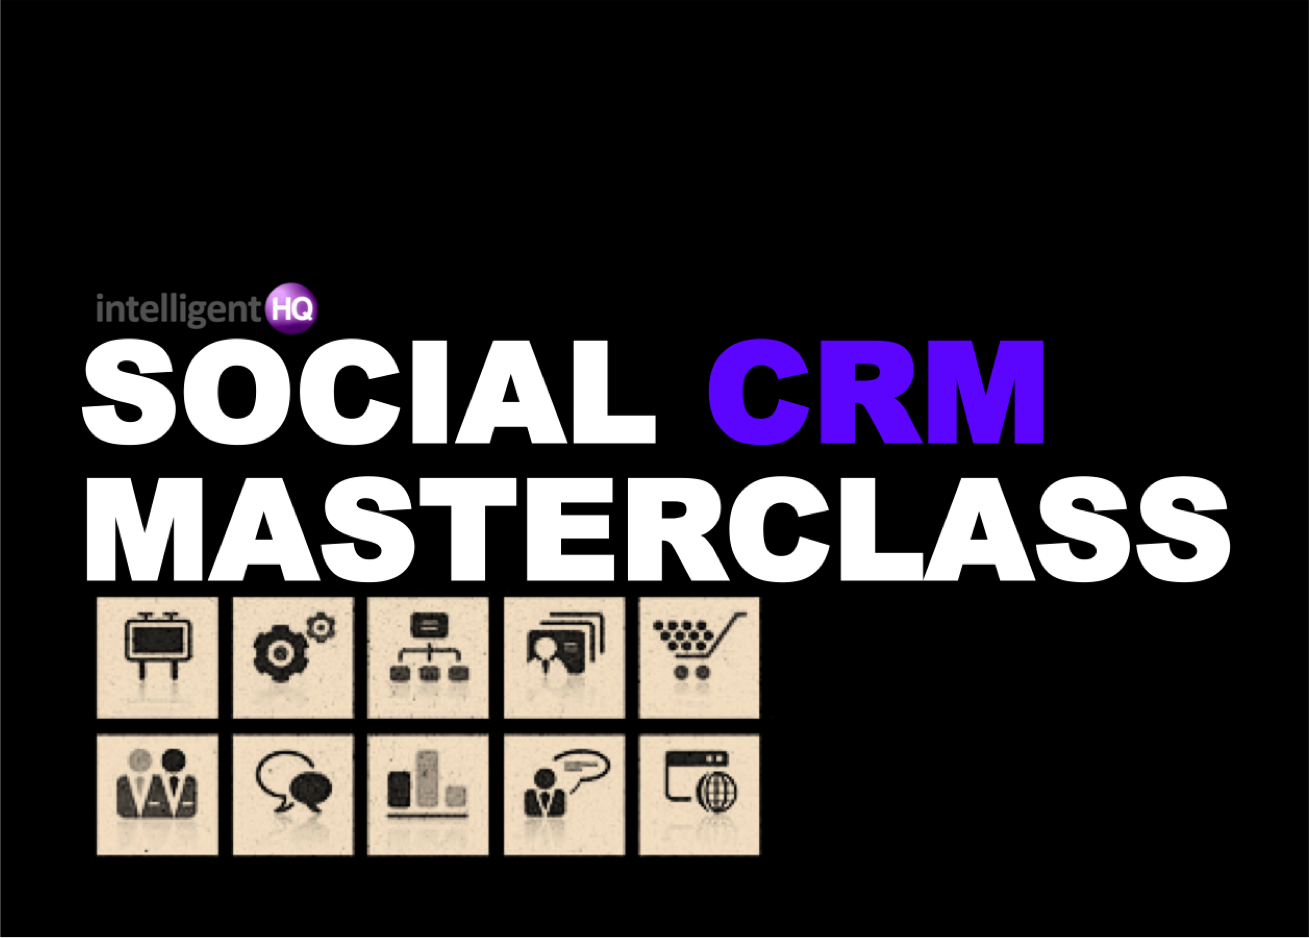 Social CRM masterclass by IntelligentHQ